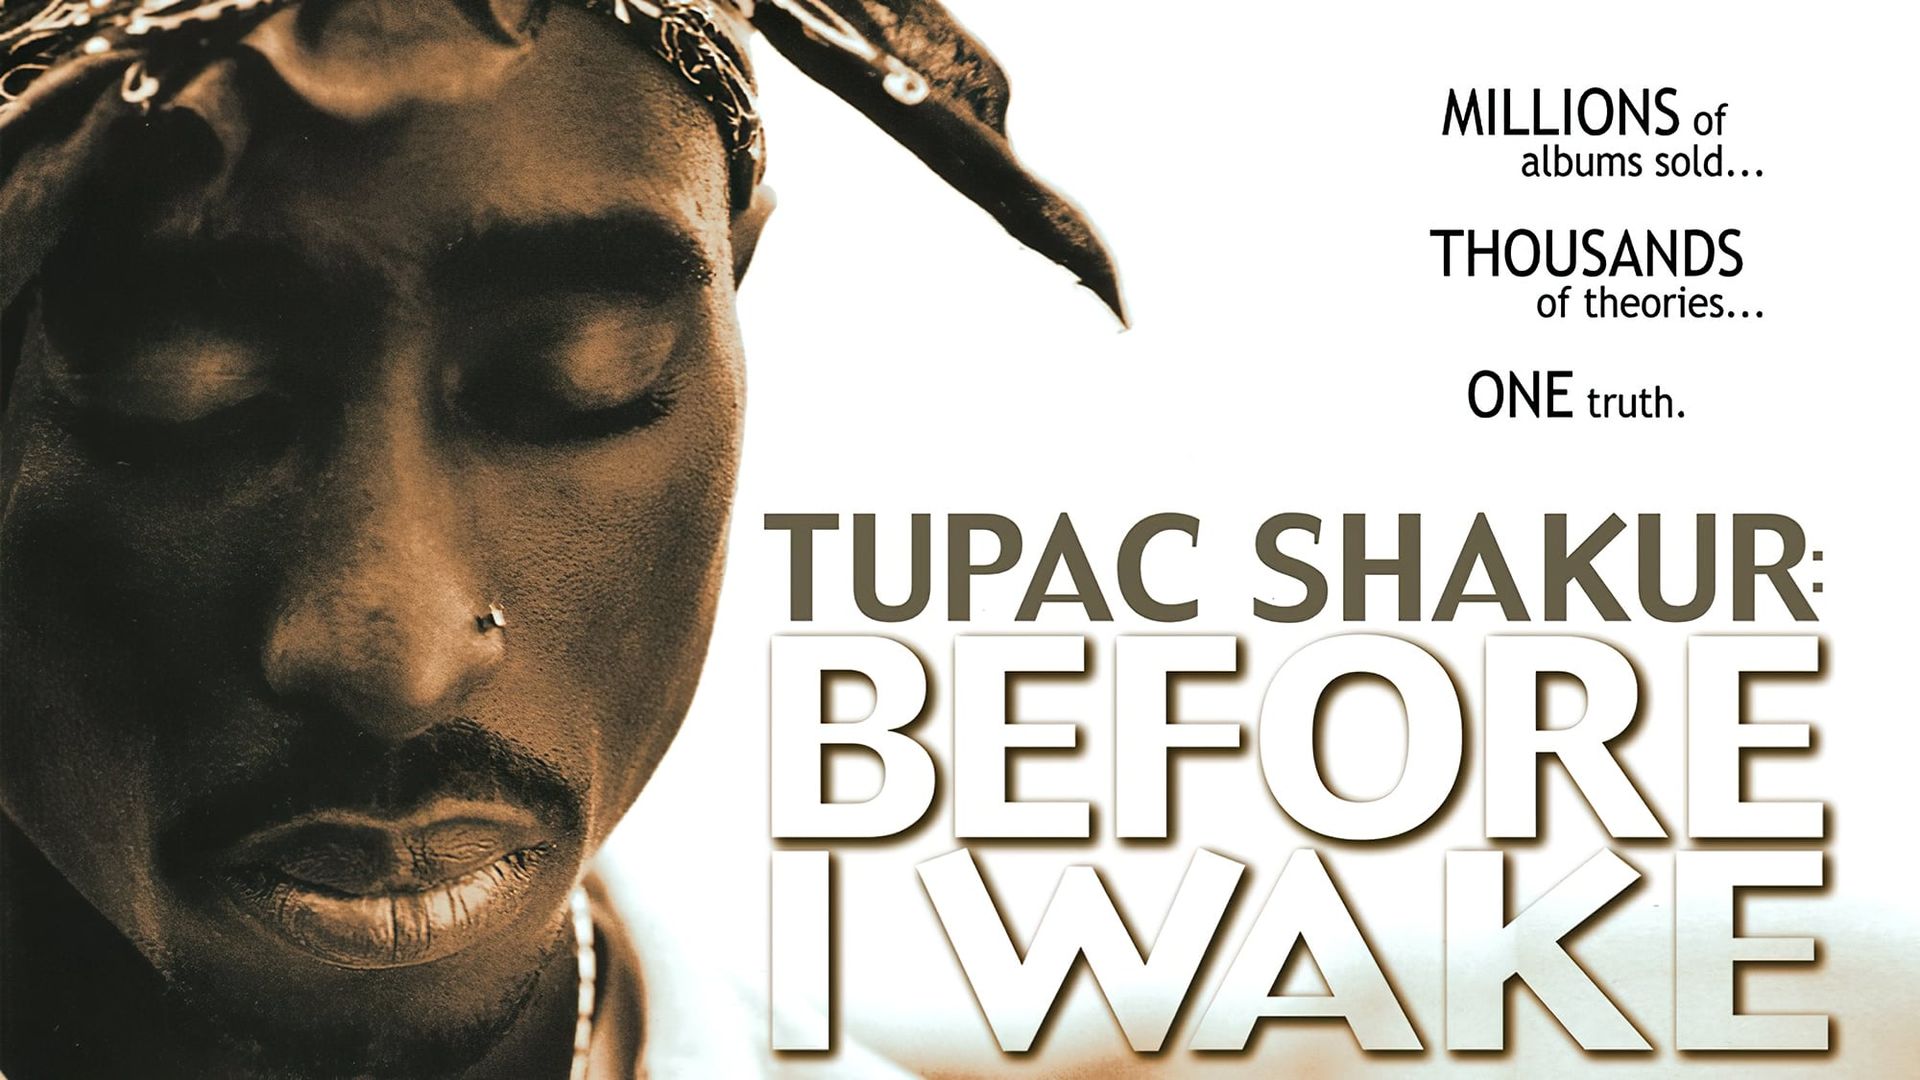 Tupac Shakur: Before I Wake... background